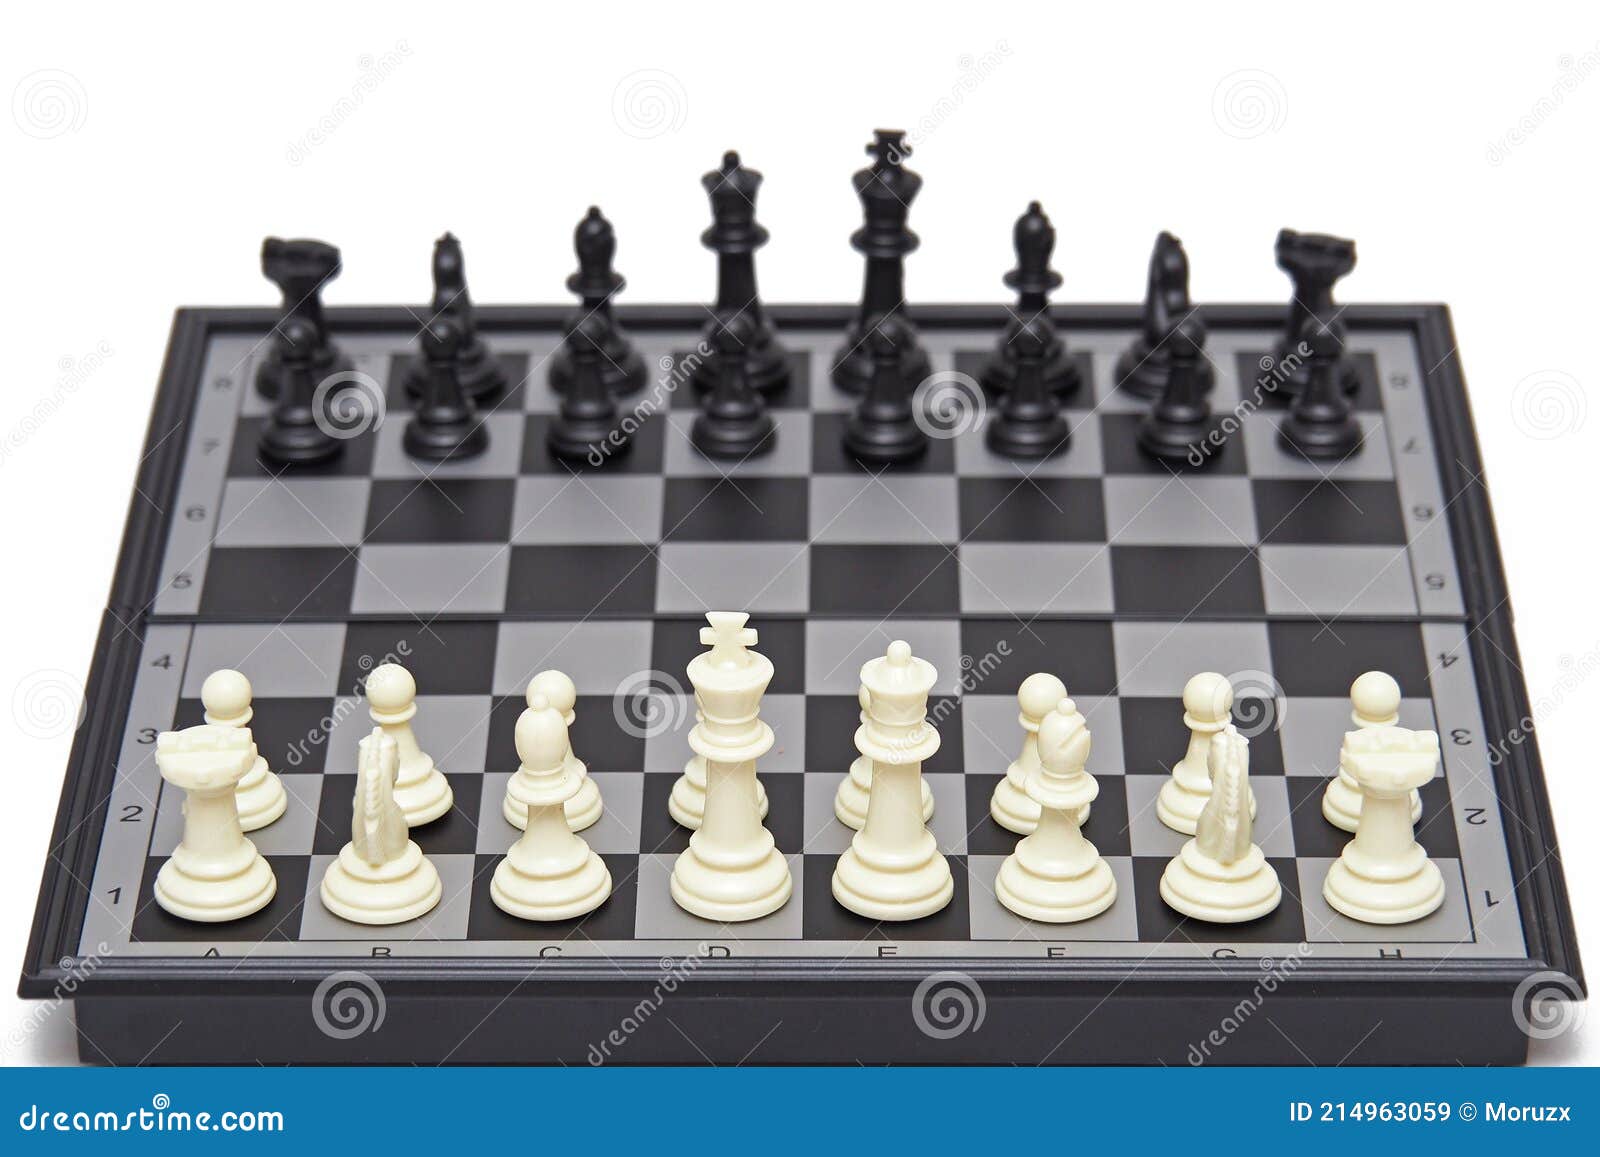 Jogo de Xadrez, Jogo de Tabuleiro e Estratégia, Xadrez [download